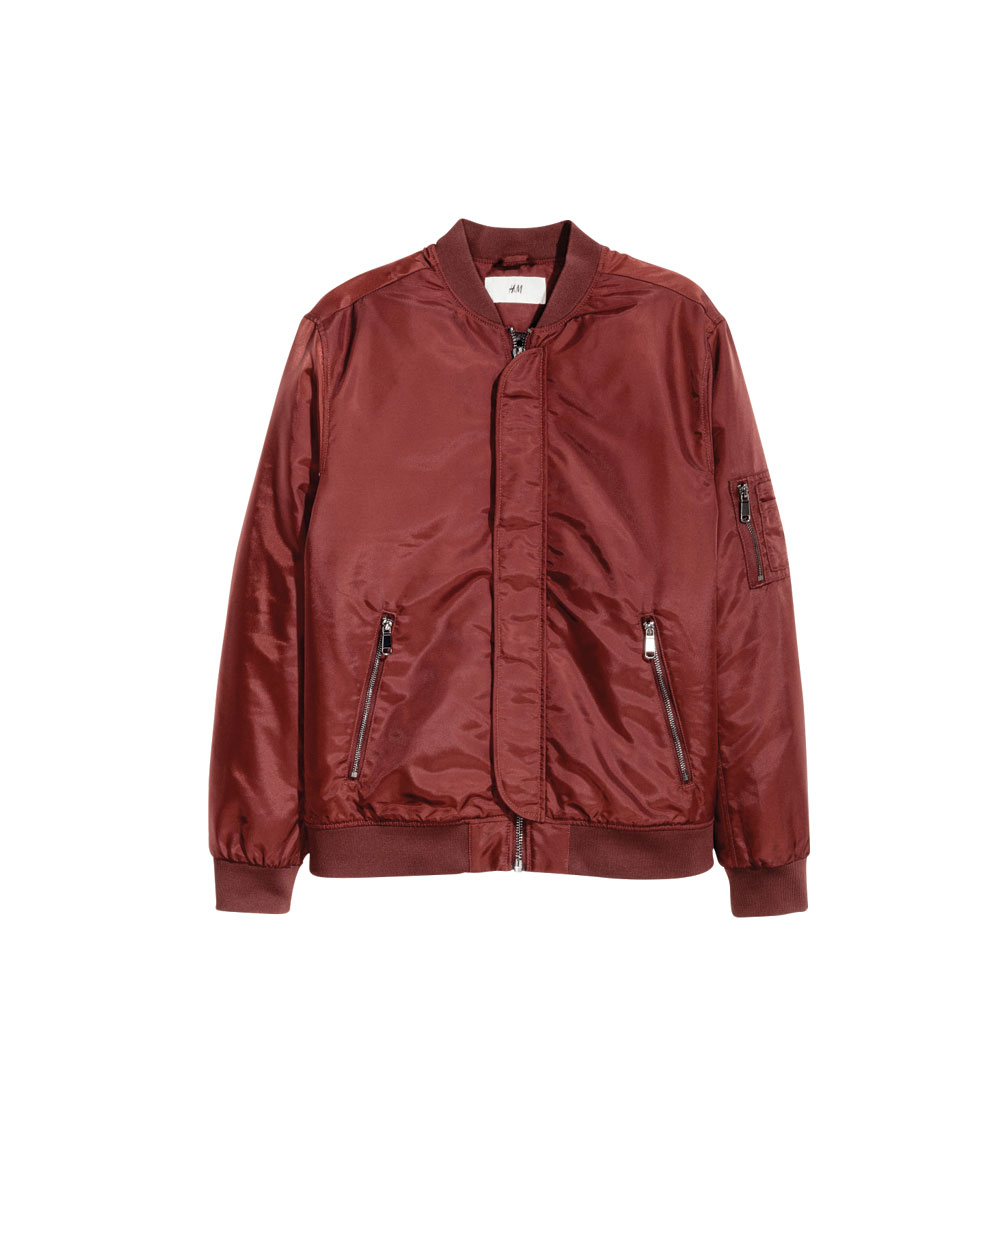 H&M jacket, $79.99